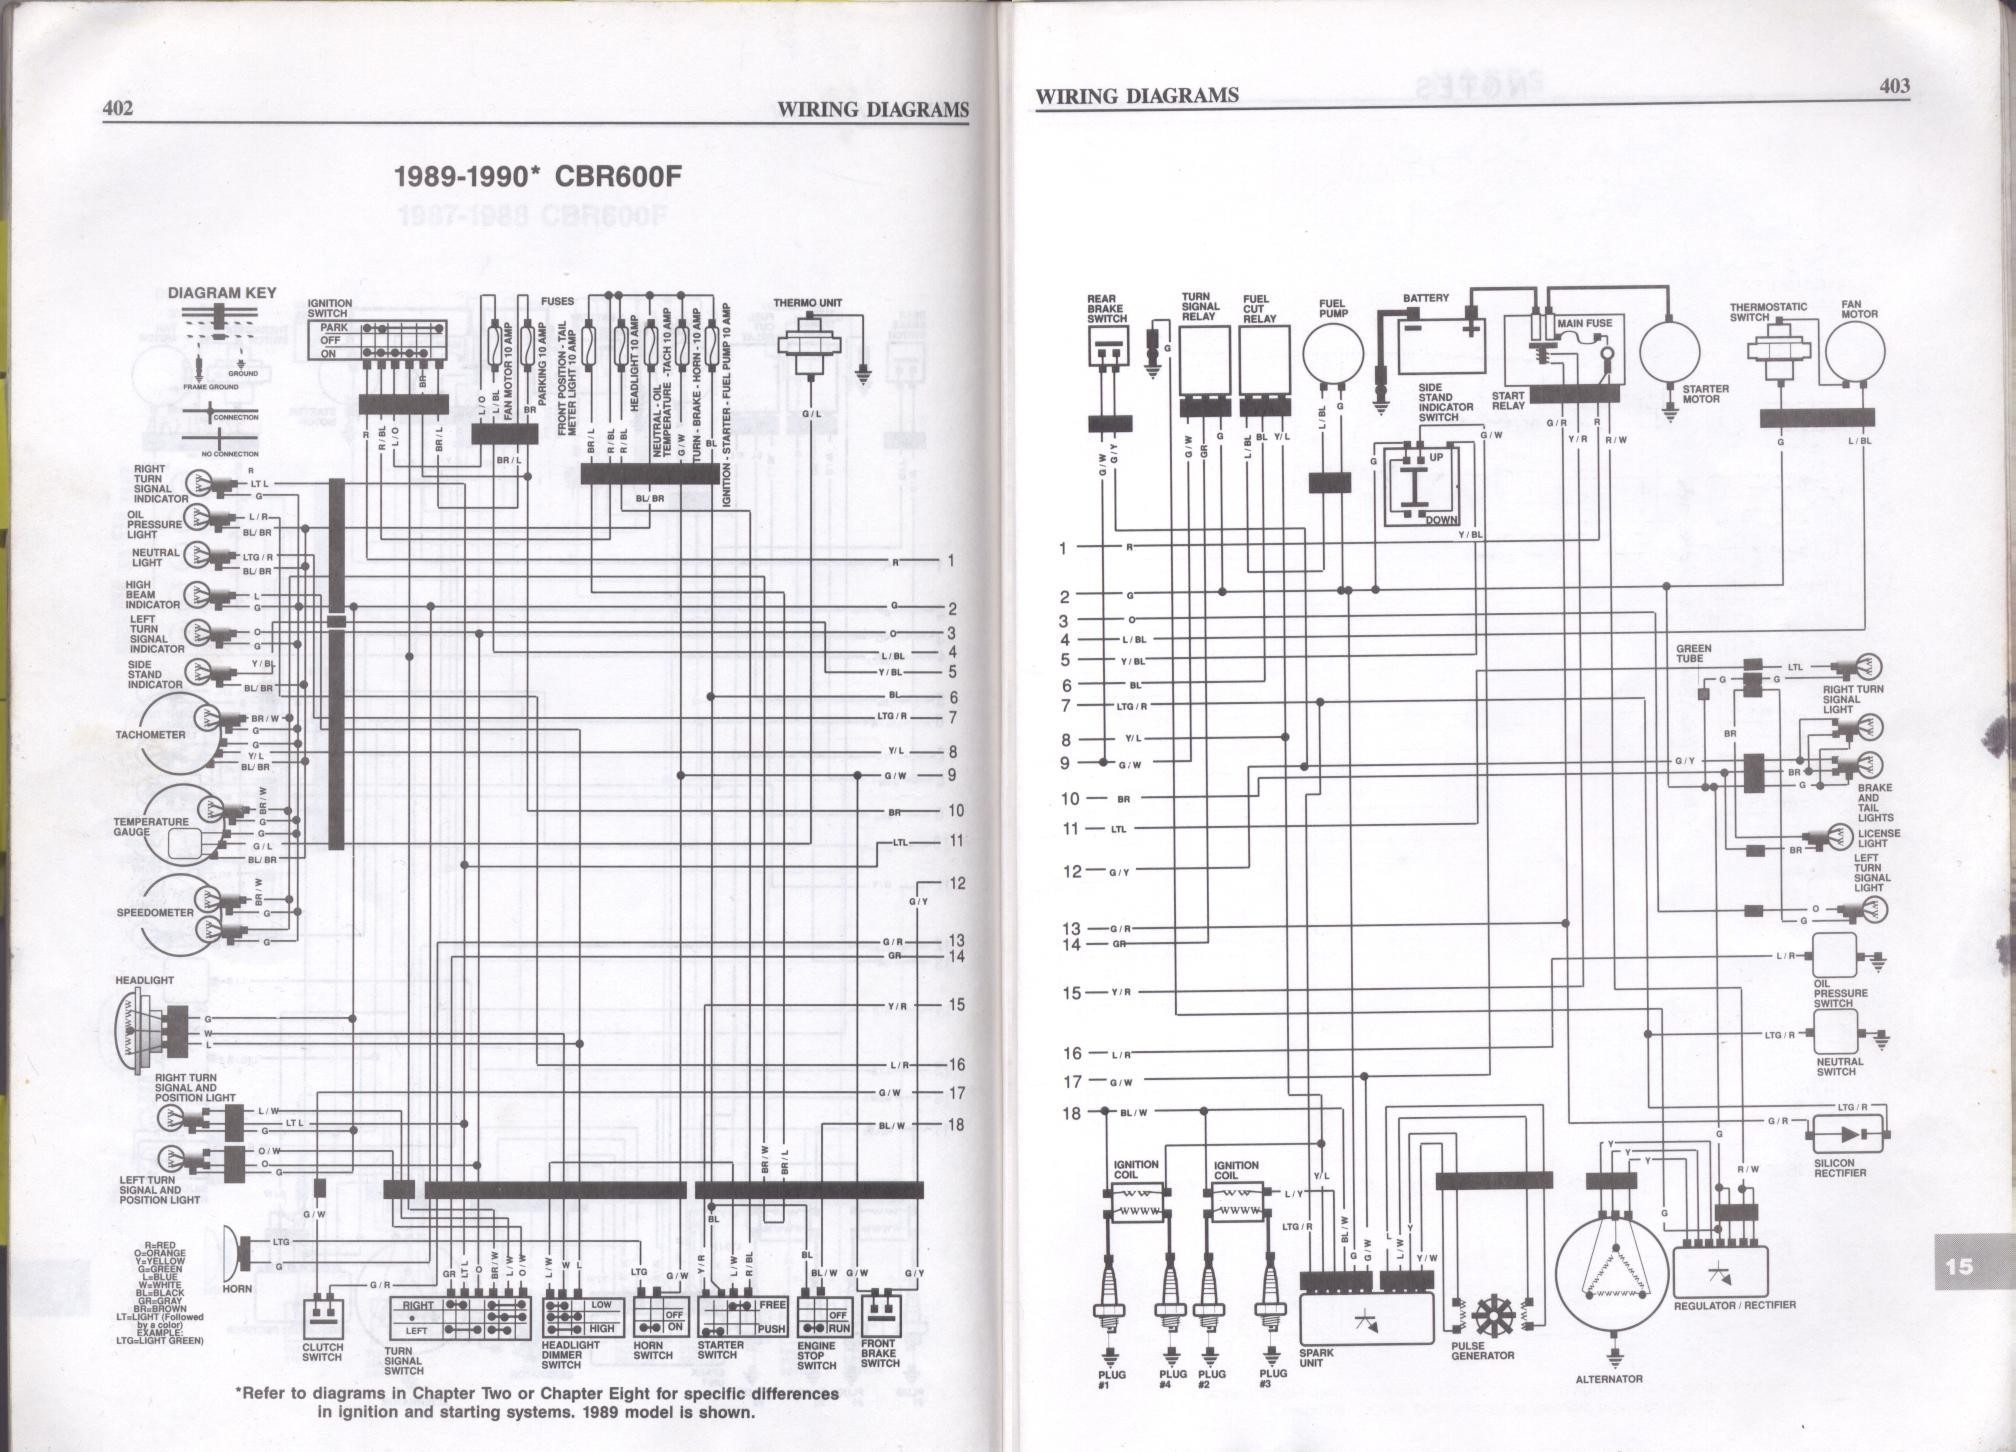 Wiring Diagram For Honda C70 Inspirationa 1980 Honda C70 Passport Wiring Diagram Refrence Index 0 0d